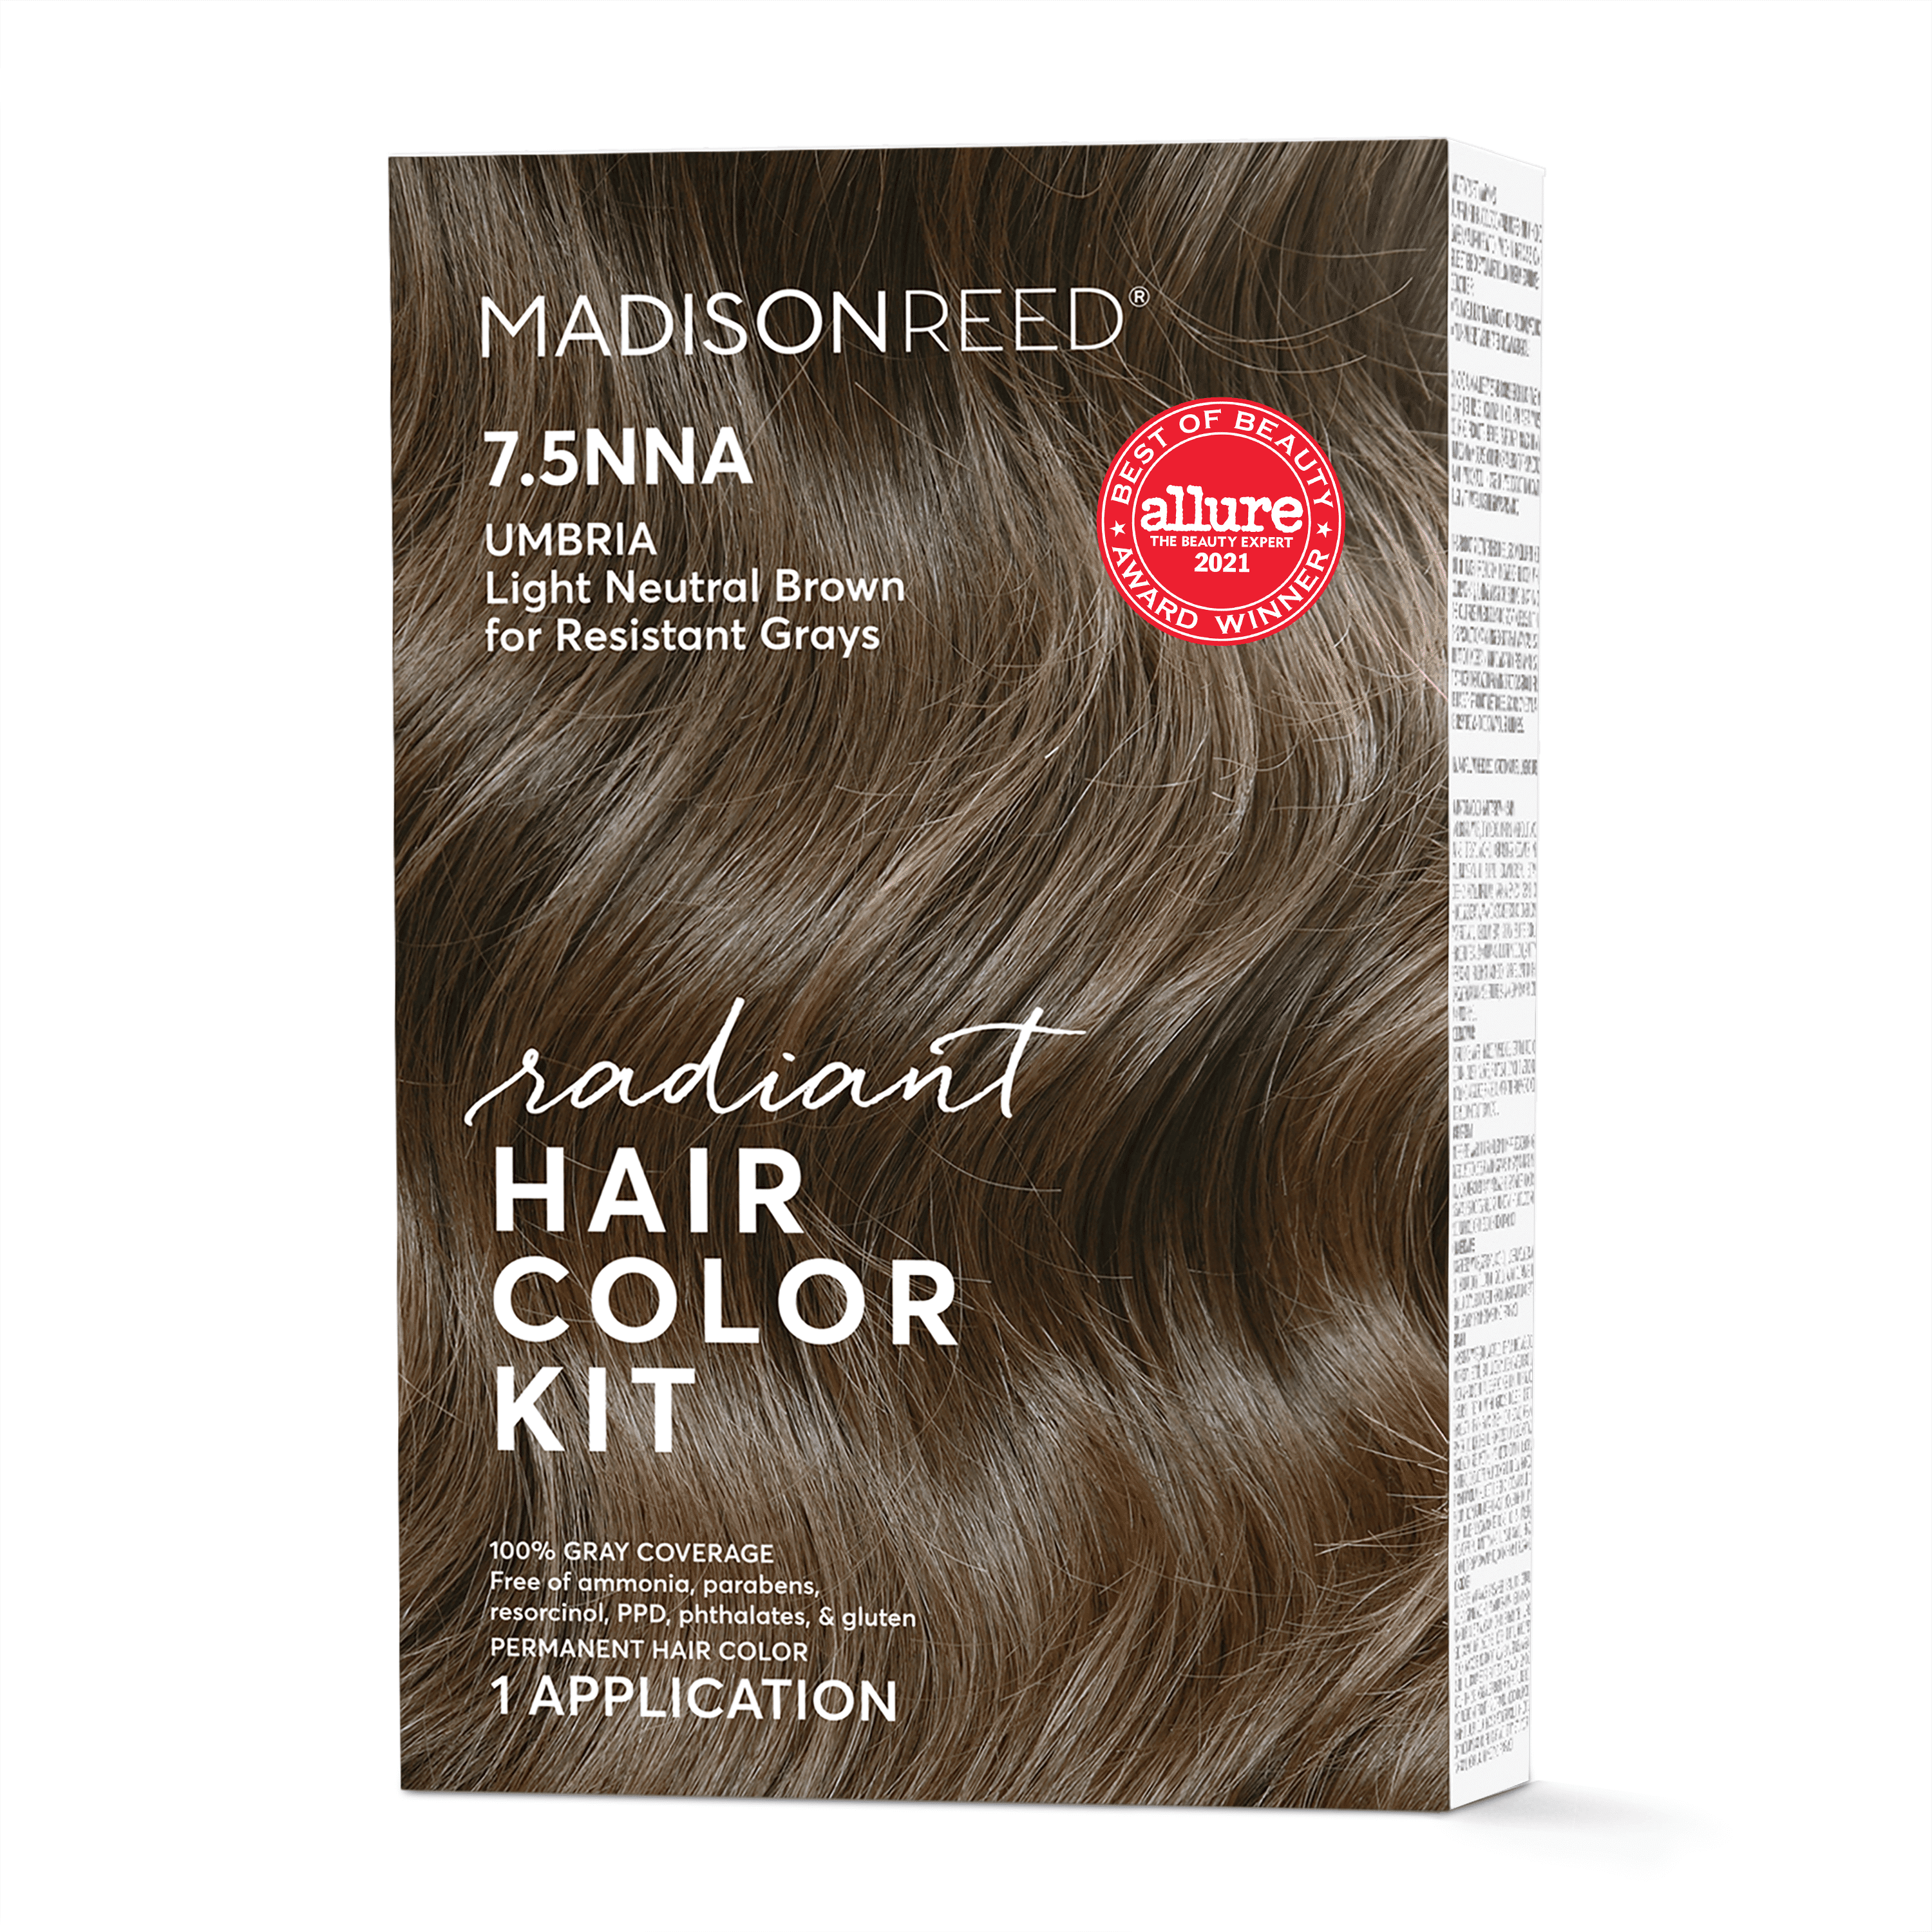 celle Hurtig pakke Madison Reed Radiant Permanent Hair Color Kit, Umbria (7.5NNA), Light  Neutral Brown, 8-Piece Kit - Walmart.com